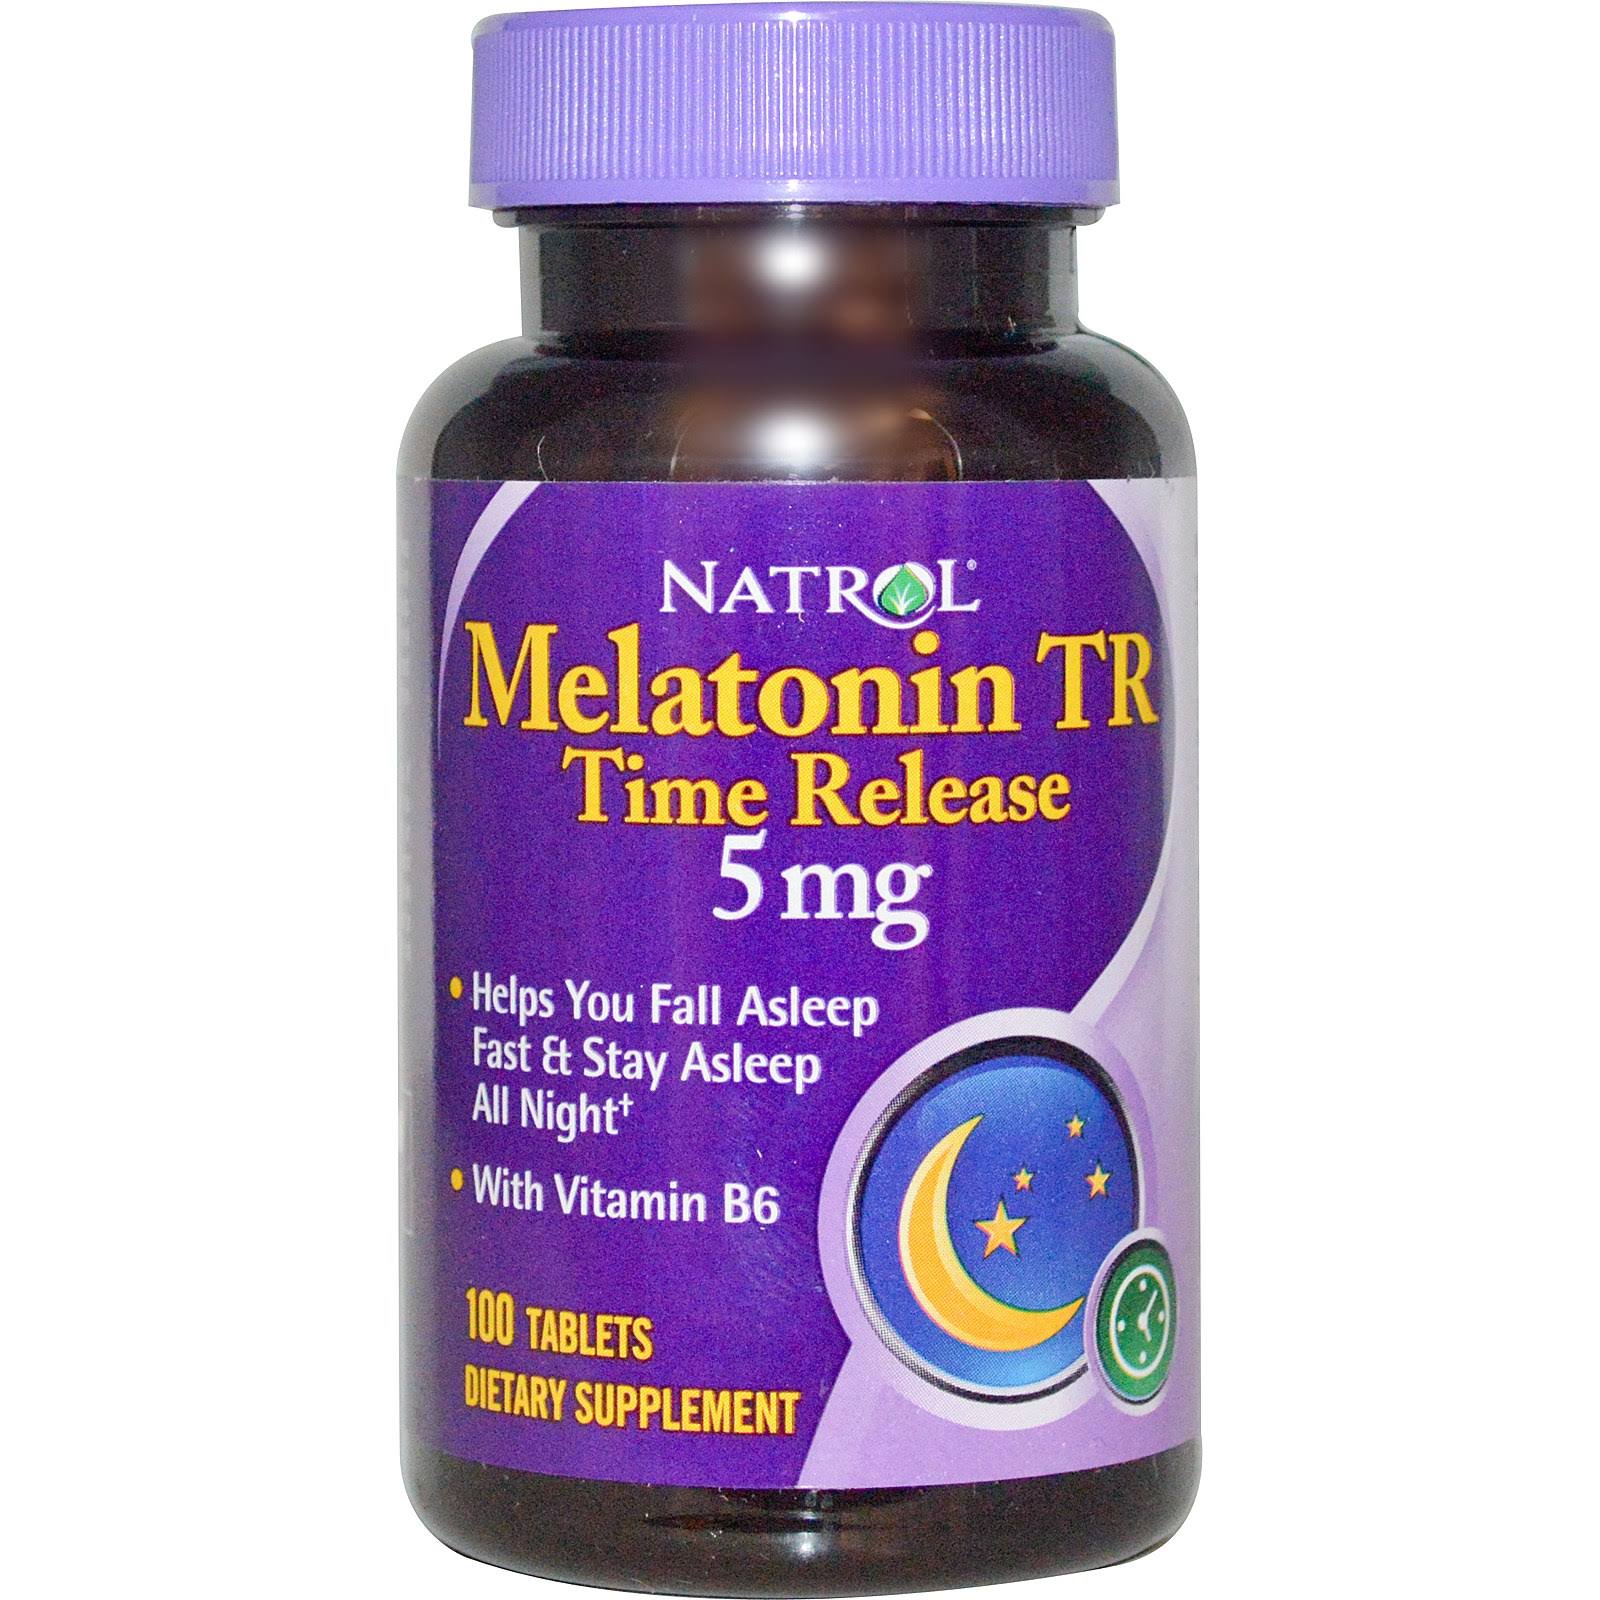 Natrol Melatonin 5mg Time Release - 100 Tablets